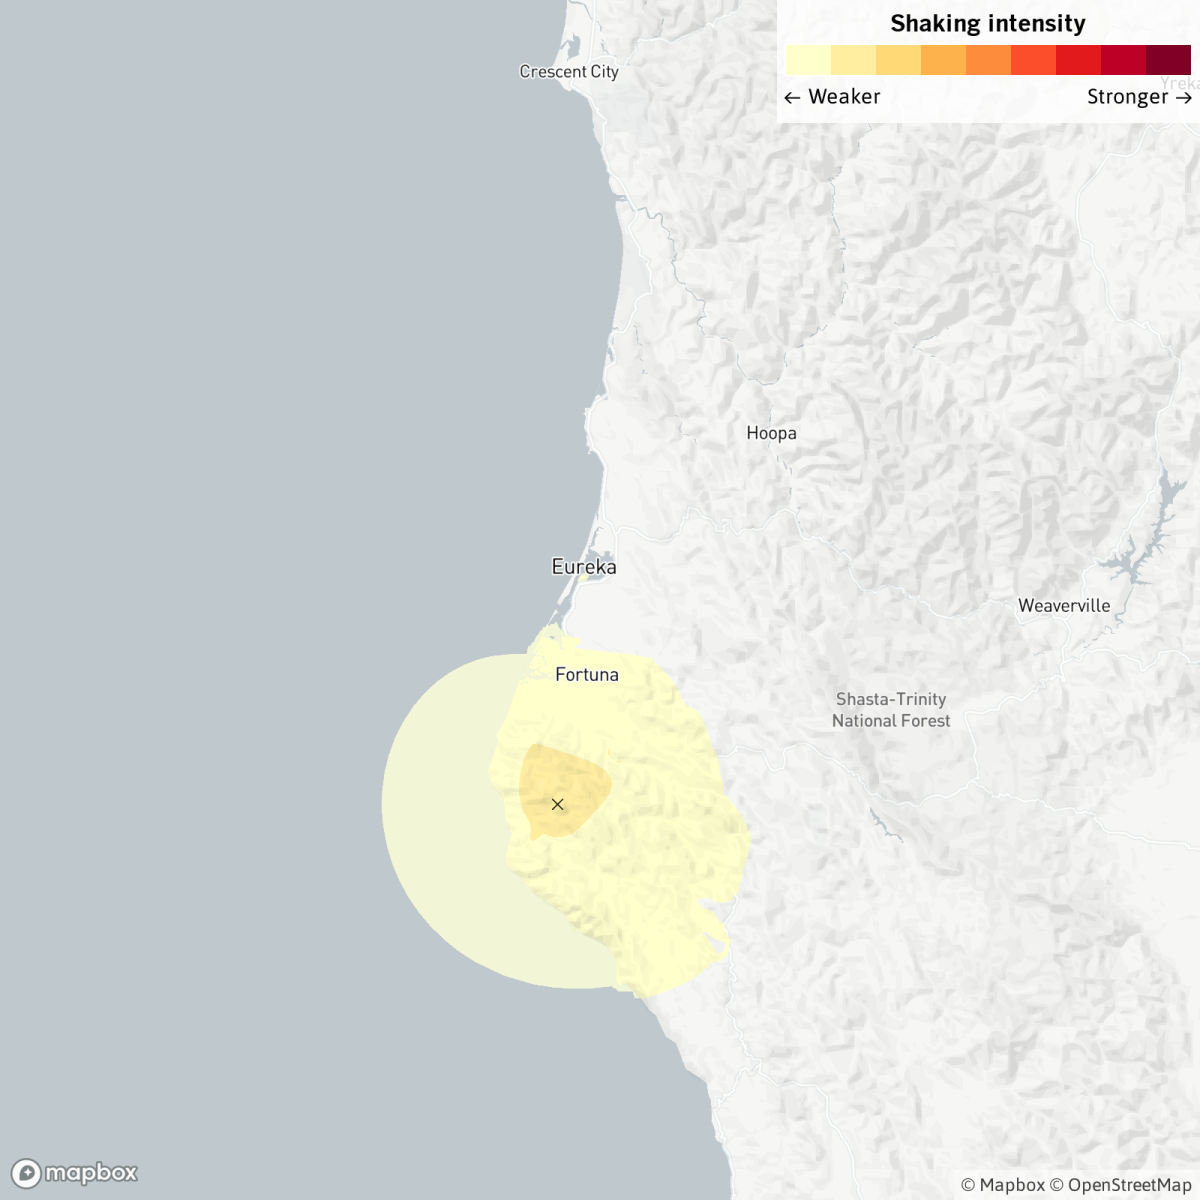 A map shows a magnitude 4.4 earthquake reported near Fortuna